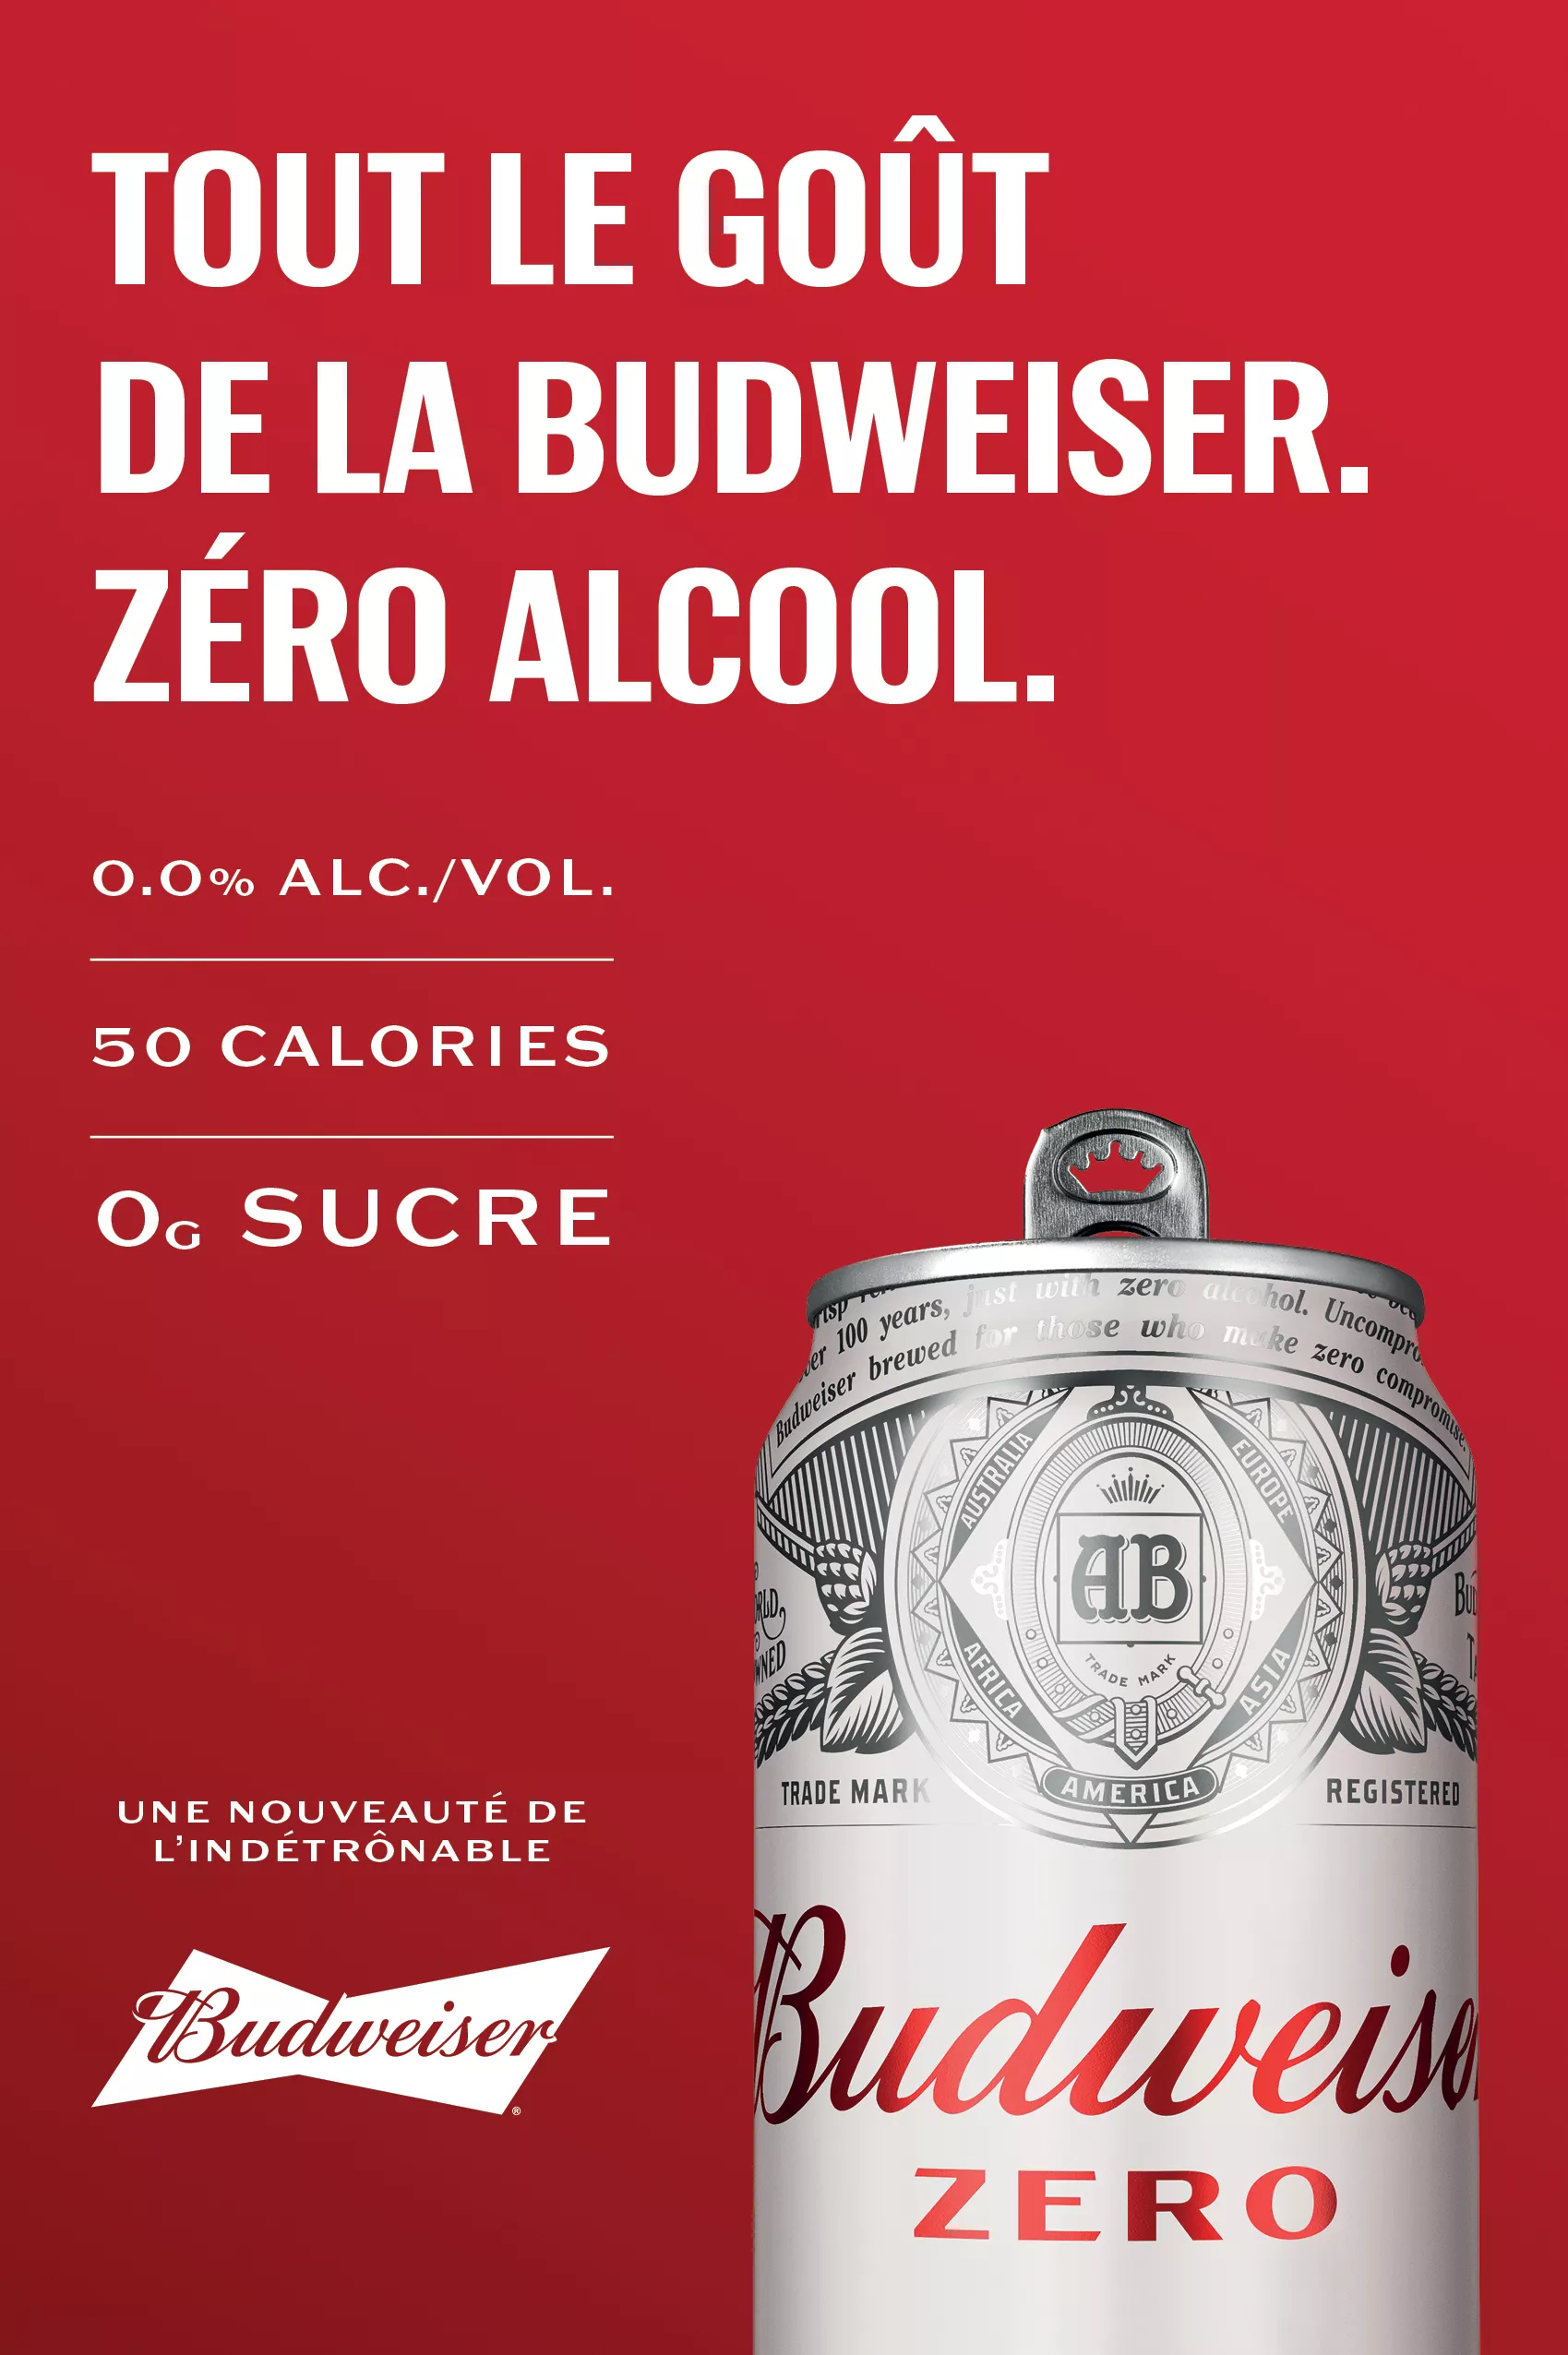 Budweiser Smooth. Zero Alcohol.